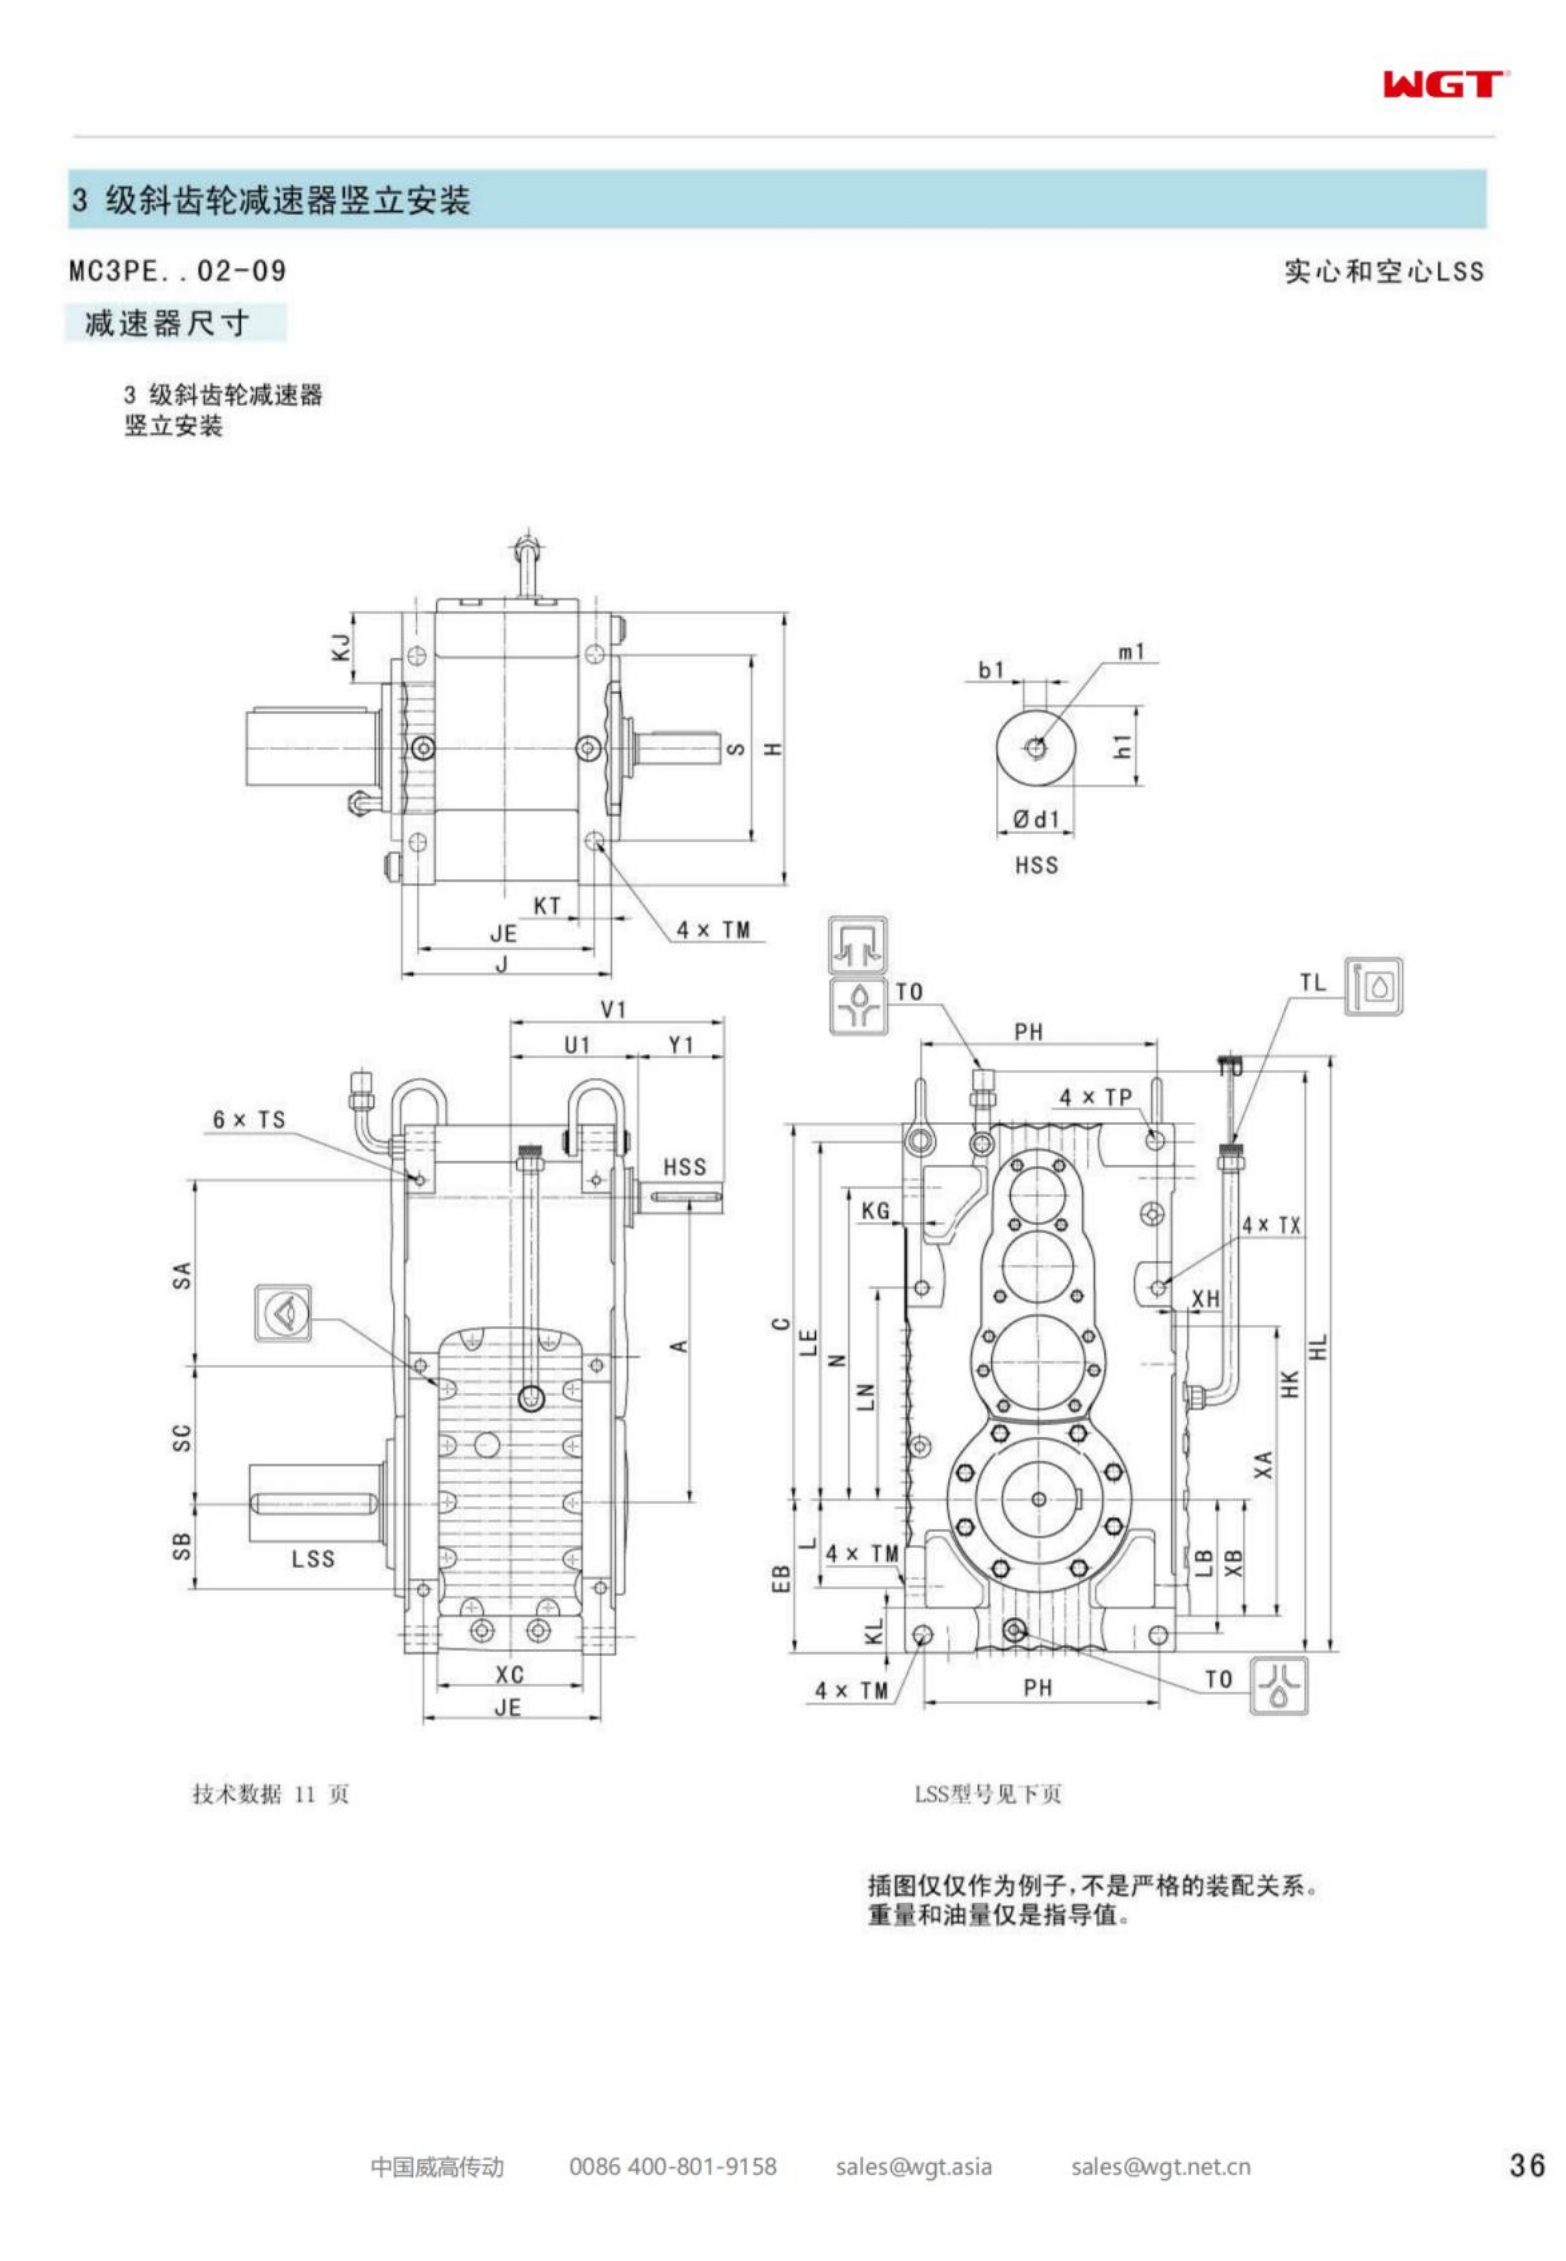 MC3PEST07 replaces _SEW_MC_Series gearbox (patent)